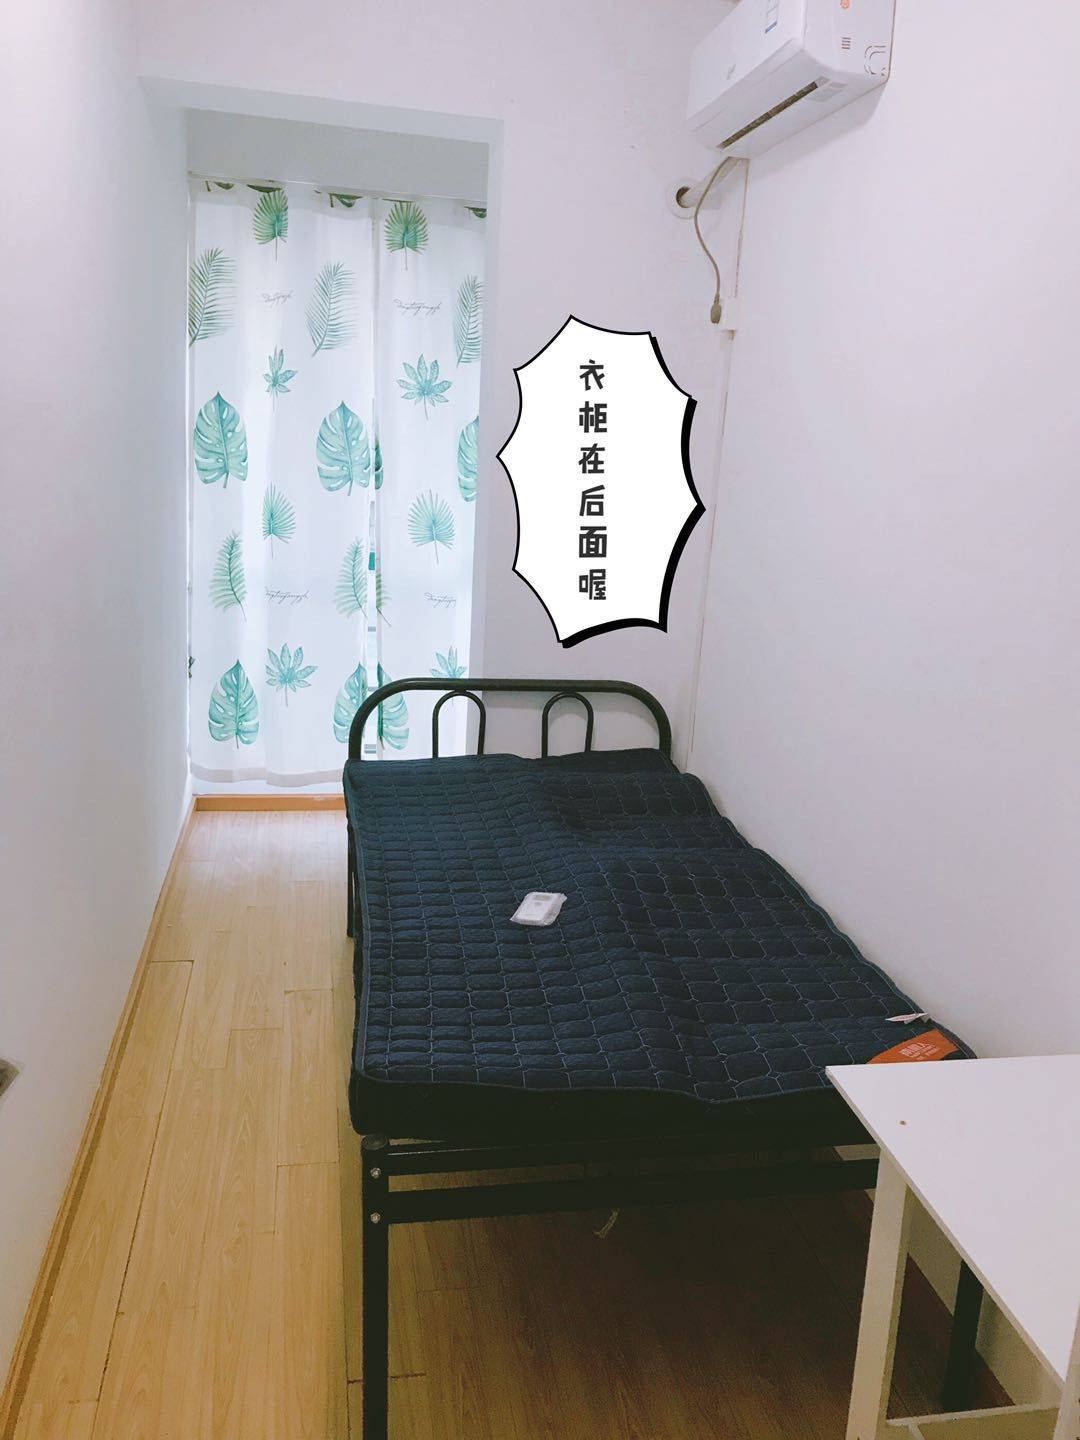 Hangzhou-Shangcheng-80RMB/Night,Cozy Home,Clean&Comfy,No Gender Limit